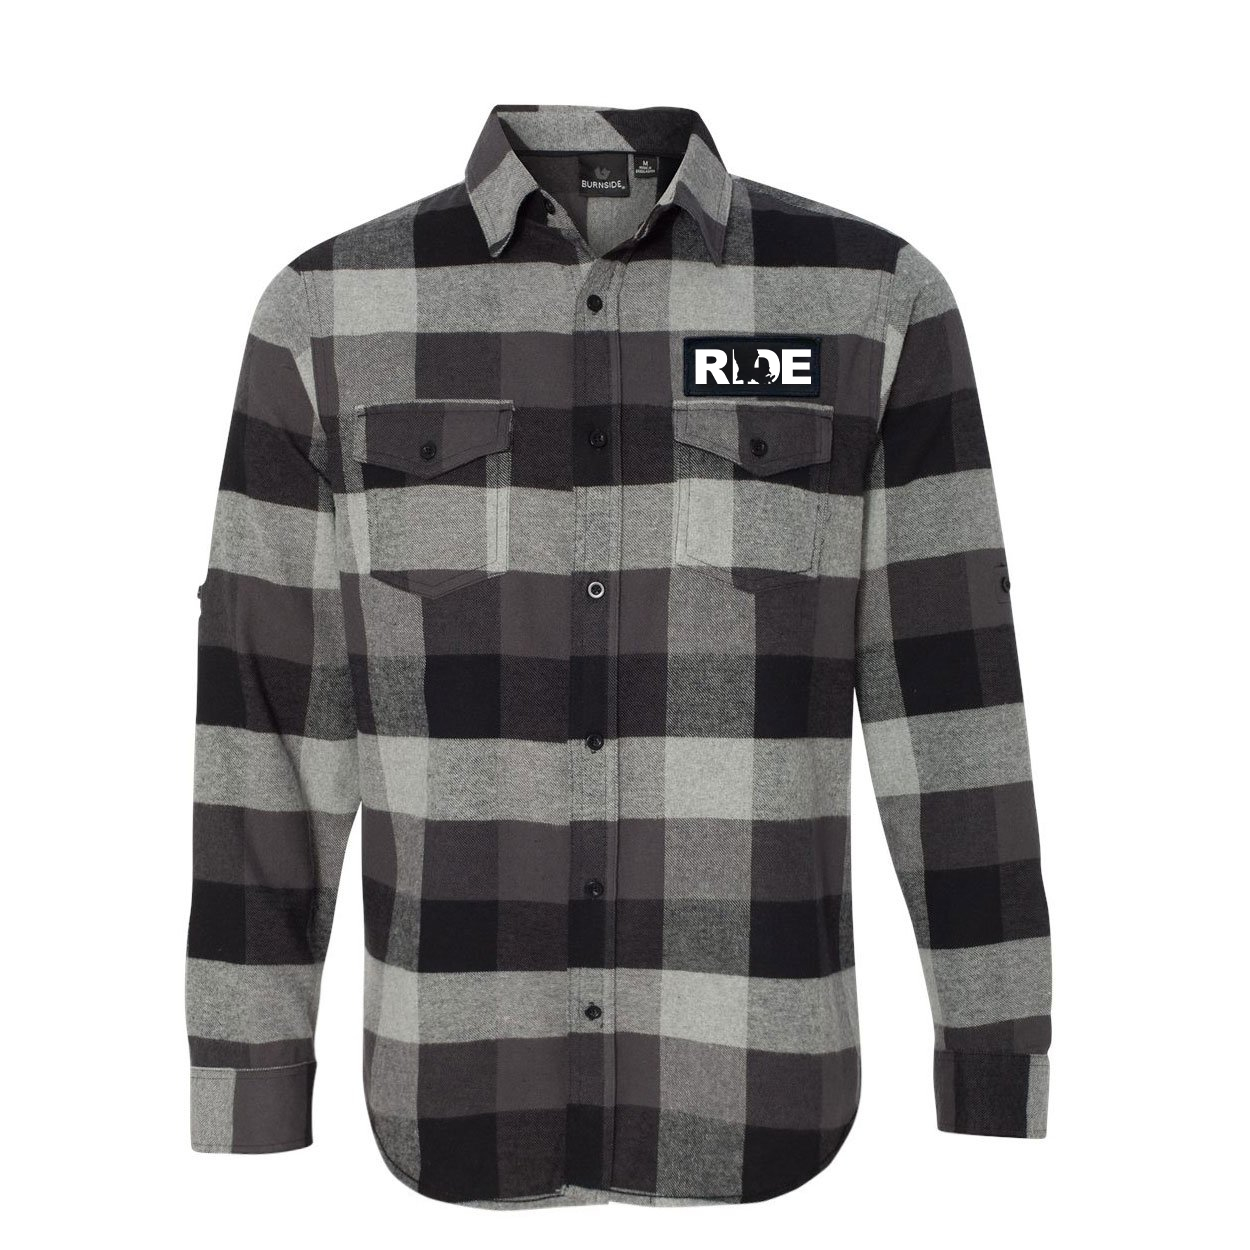 Ride Louisiana Classic Unisex Long Sleeve Woven Patch Flannel Shirt Black/Gray (White Logo)